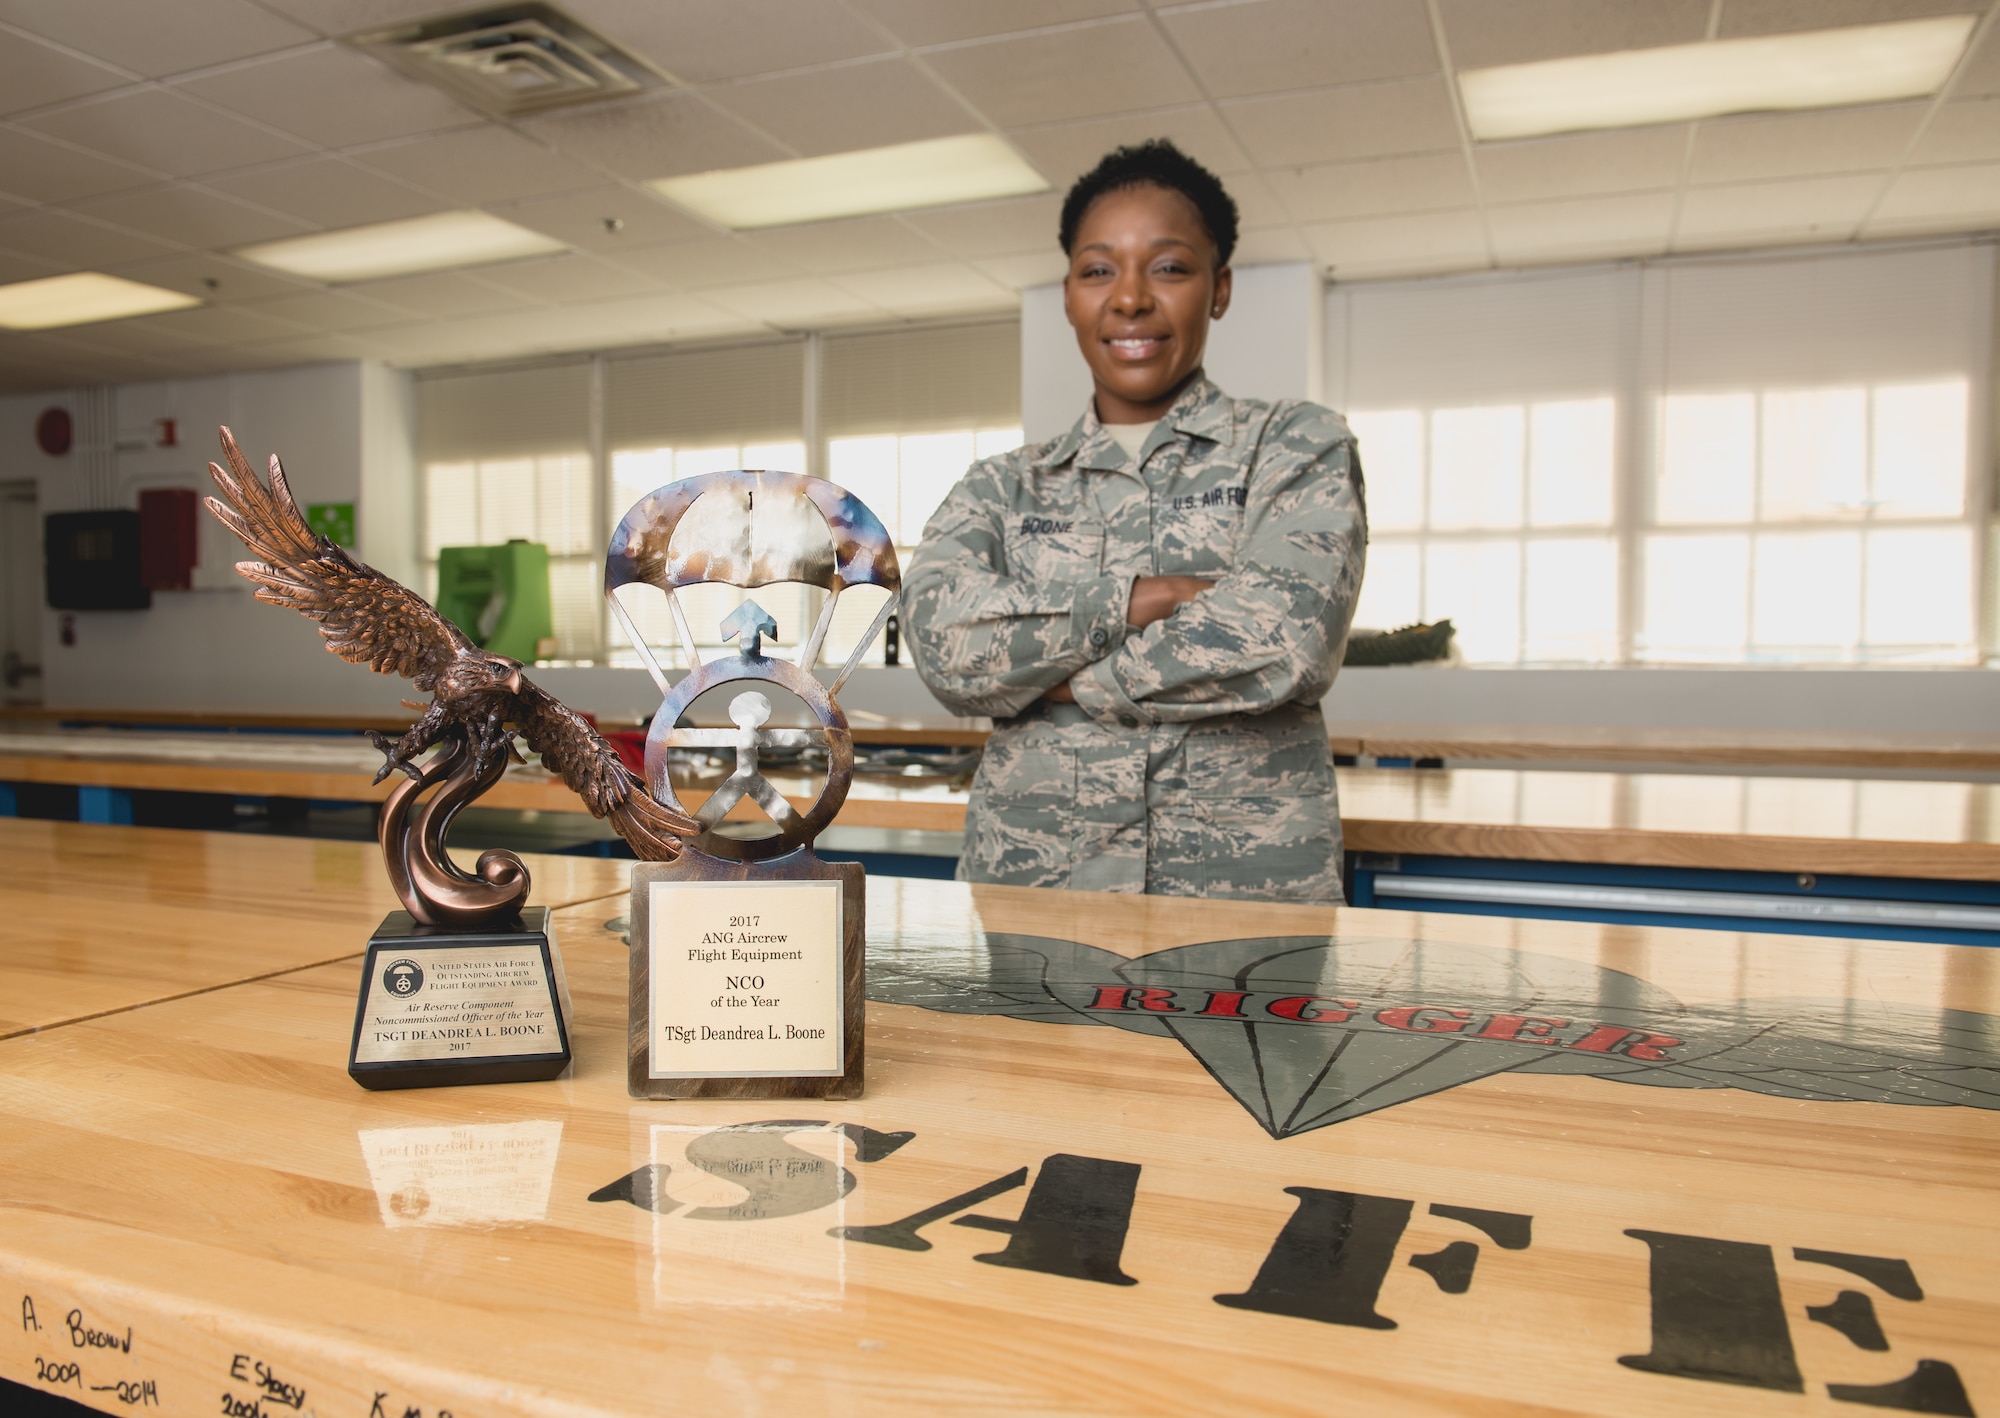 Virginia Air National Guard Airman wins reserve component level award